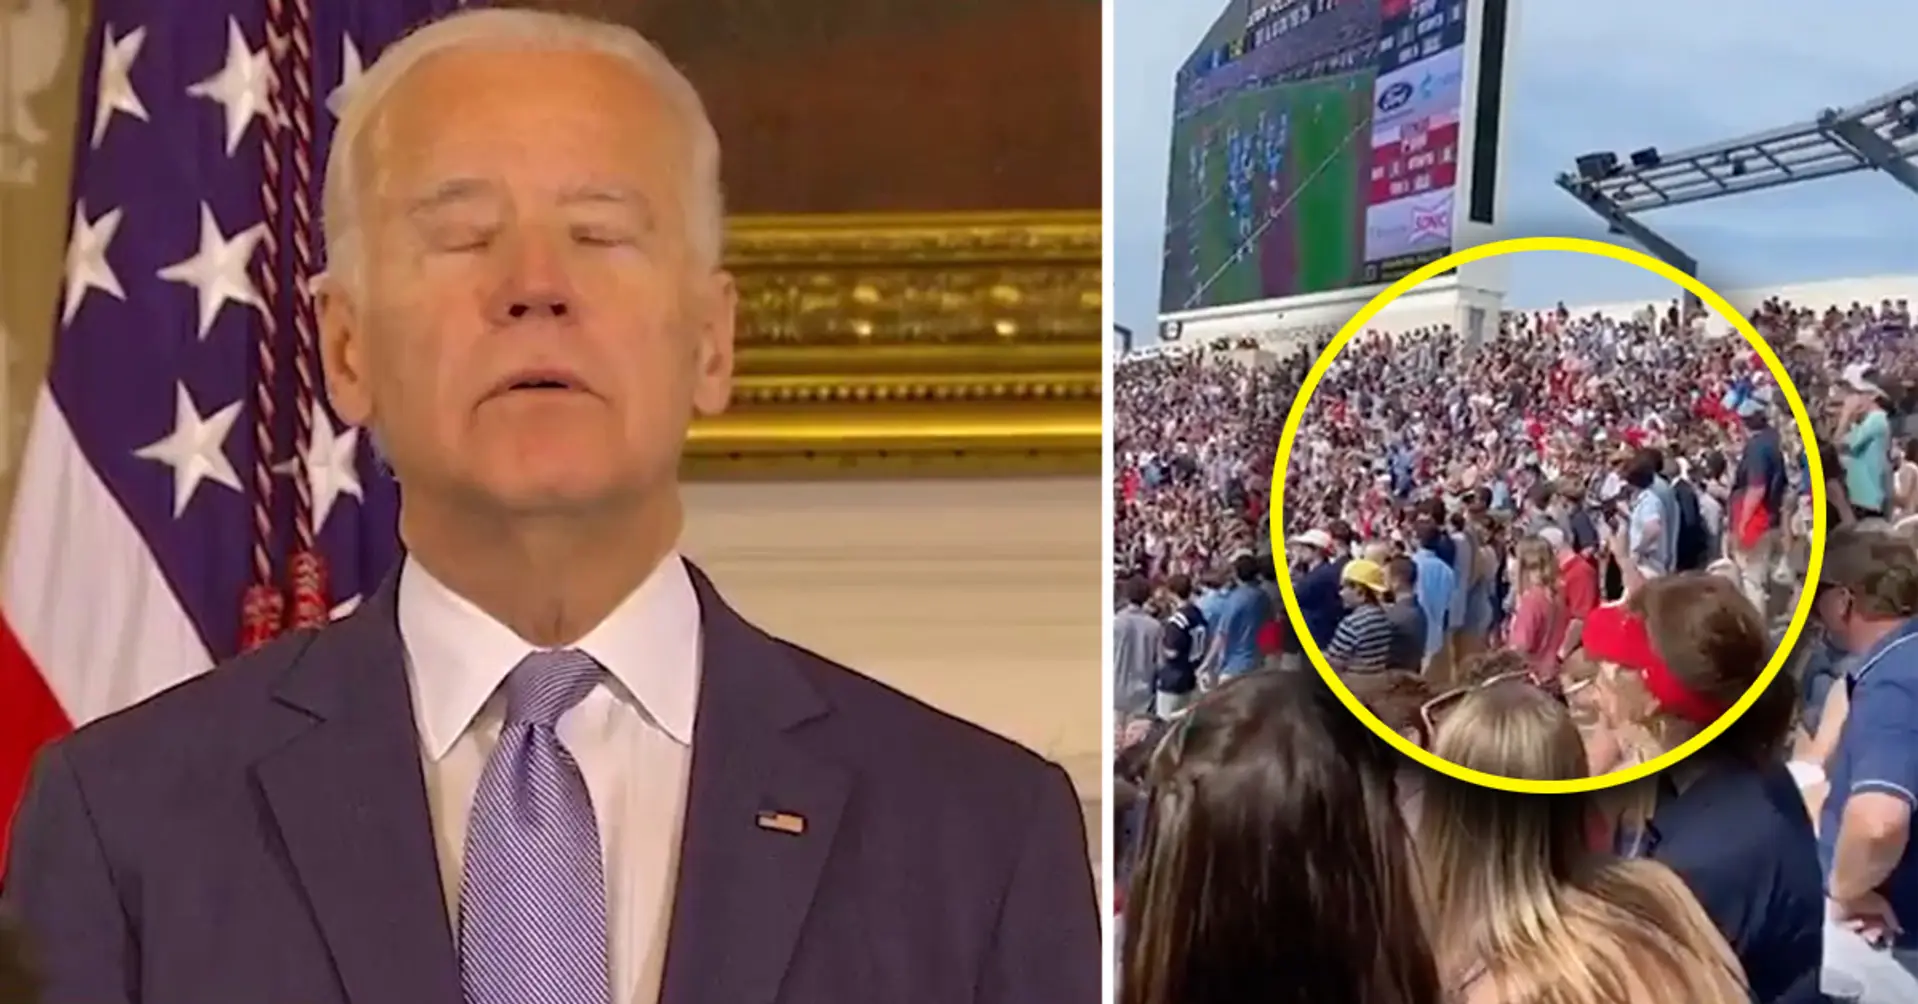 Revealed: exact words about Joe Biden that football fans chanted in Arkansas 